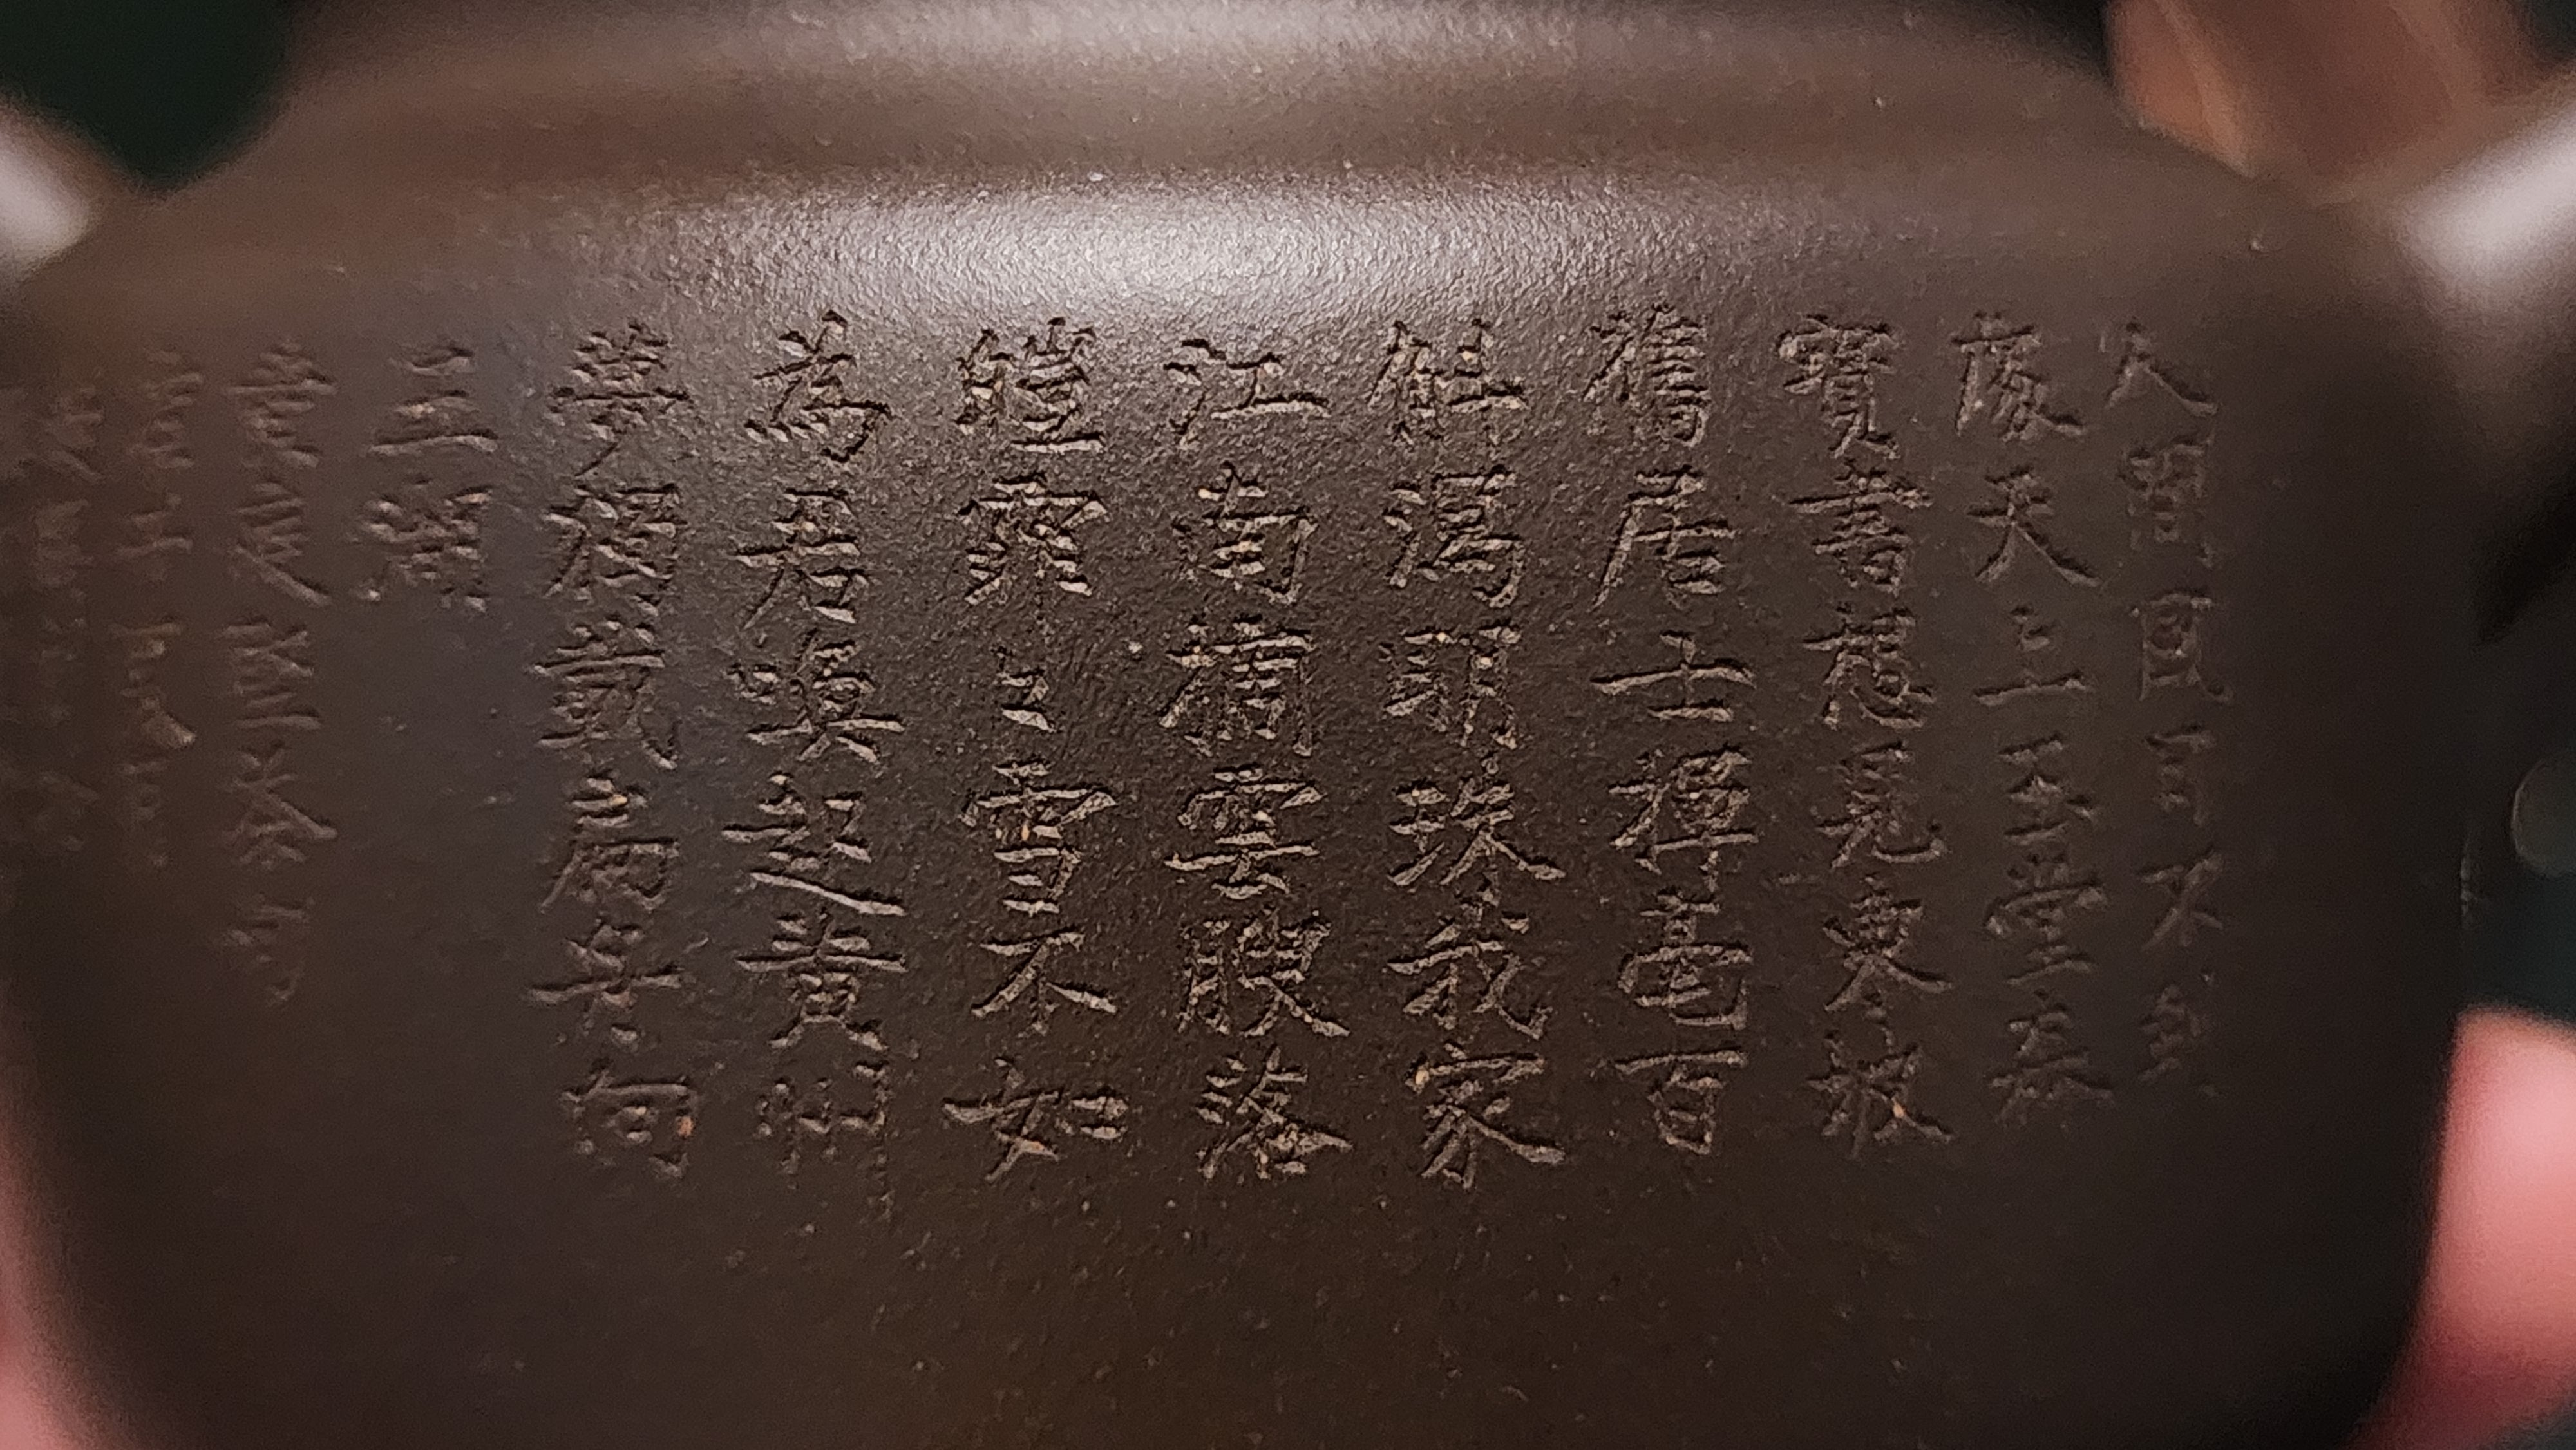 Ming Xiang 茗香, Clay (extinct): Wu Ni 乌泥 from Grand Master Han Qi Lou 韩其楼, Engraving Art by Master Wang Chao Peng 王超鹏, Pot crafted by Master Lu Shun Rong 陆顺荣。